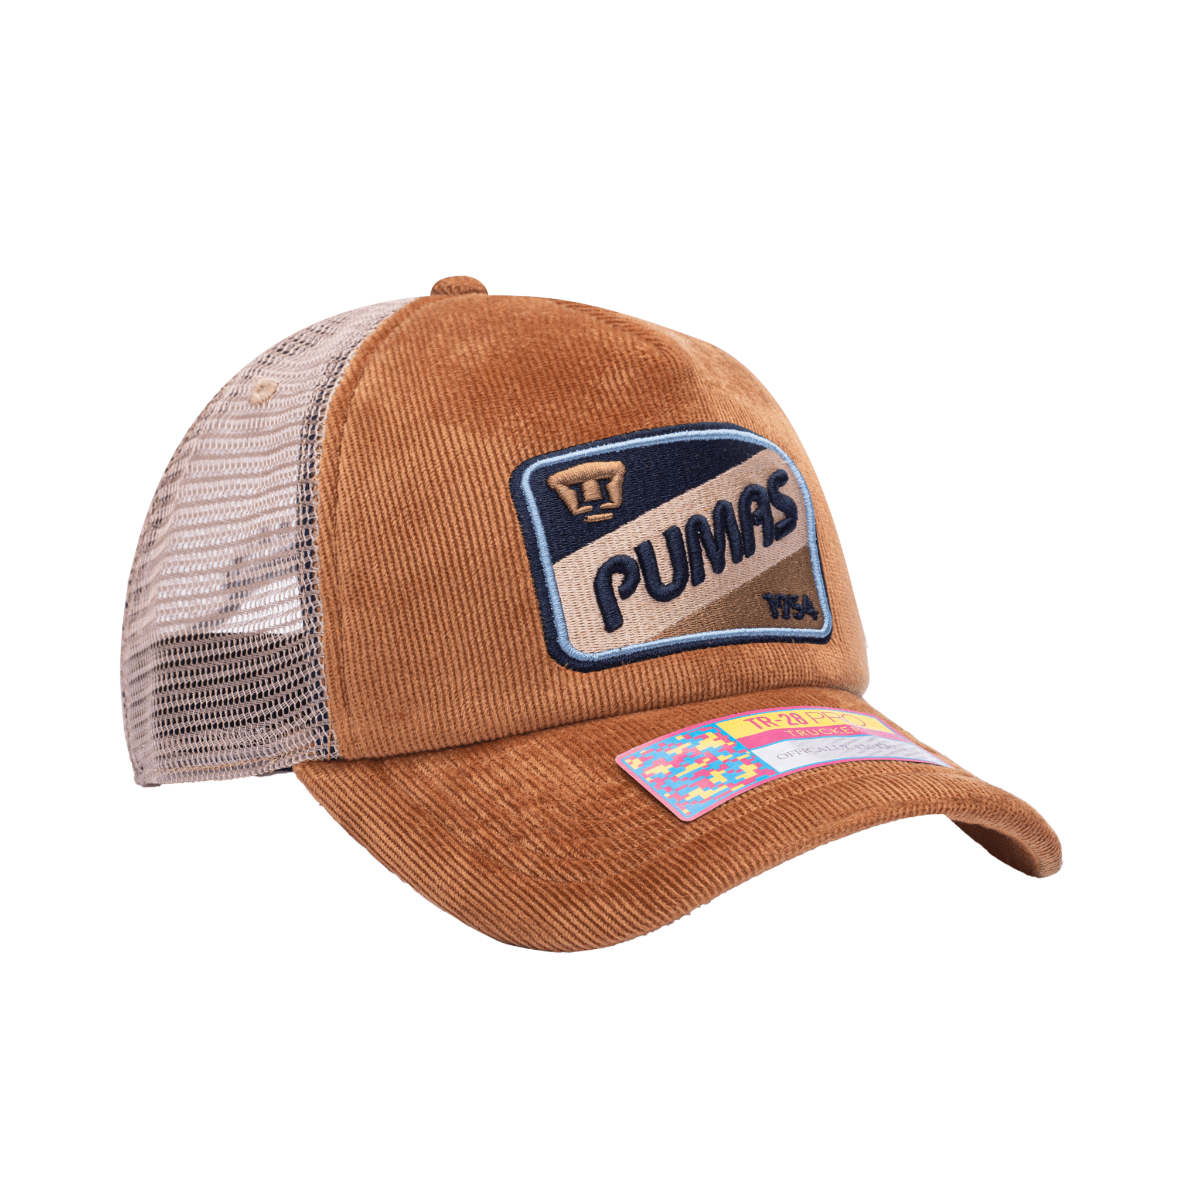 FI Collection Pumas Camionero Trucker Hat - Brown (Diagonal 2)